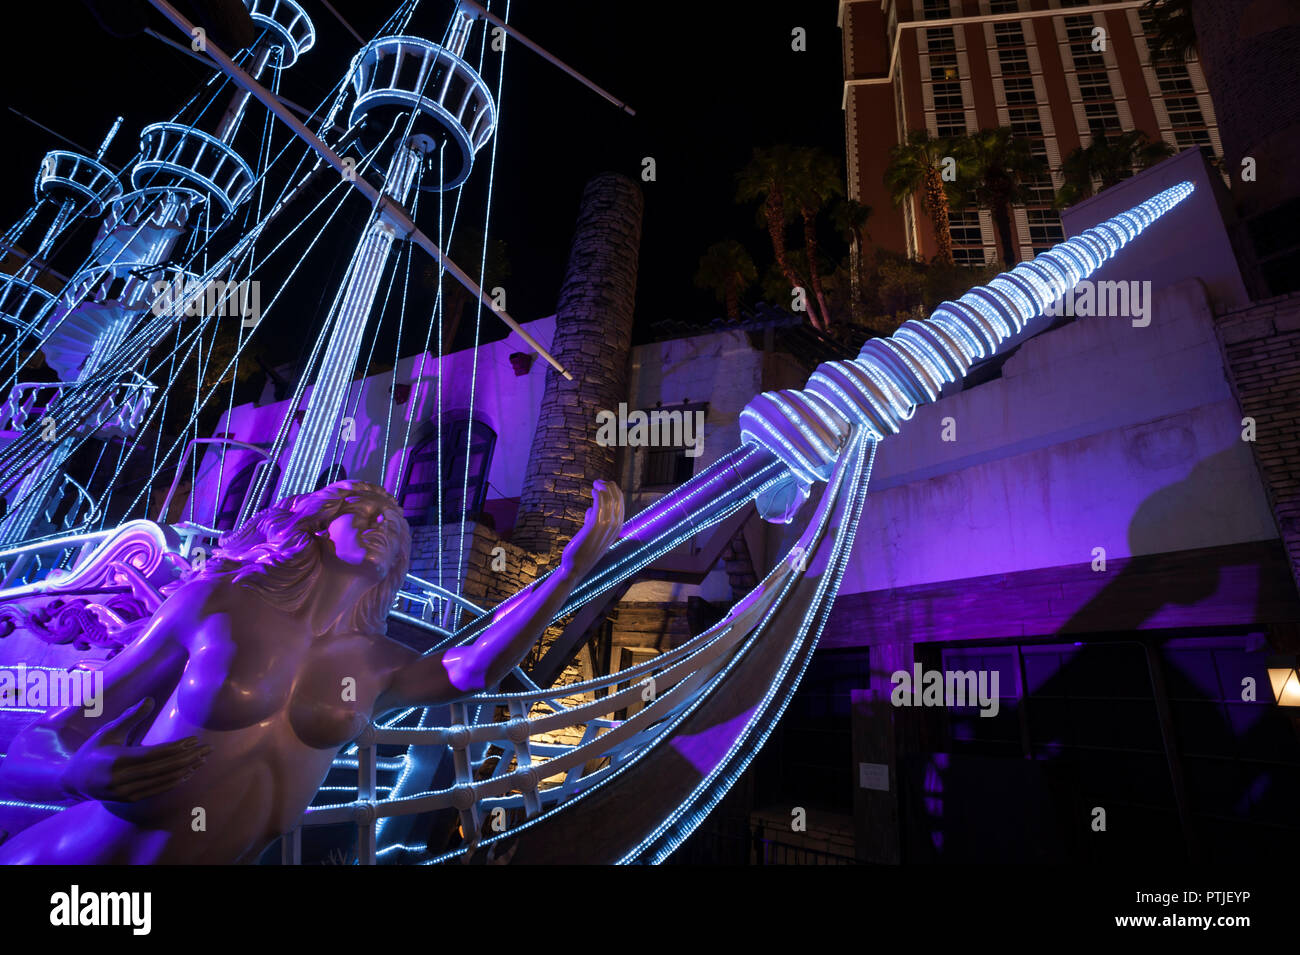 Illuminated pirate ship with statue representing a siren at Treasure Island Hotel and Casino, Las Vegas, Nevada, USA. Stock Photo